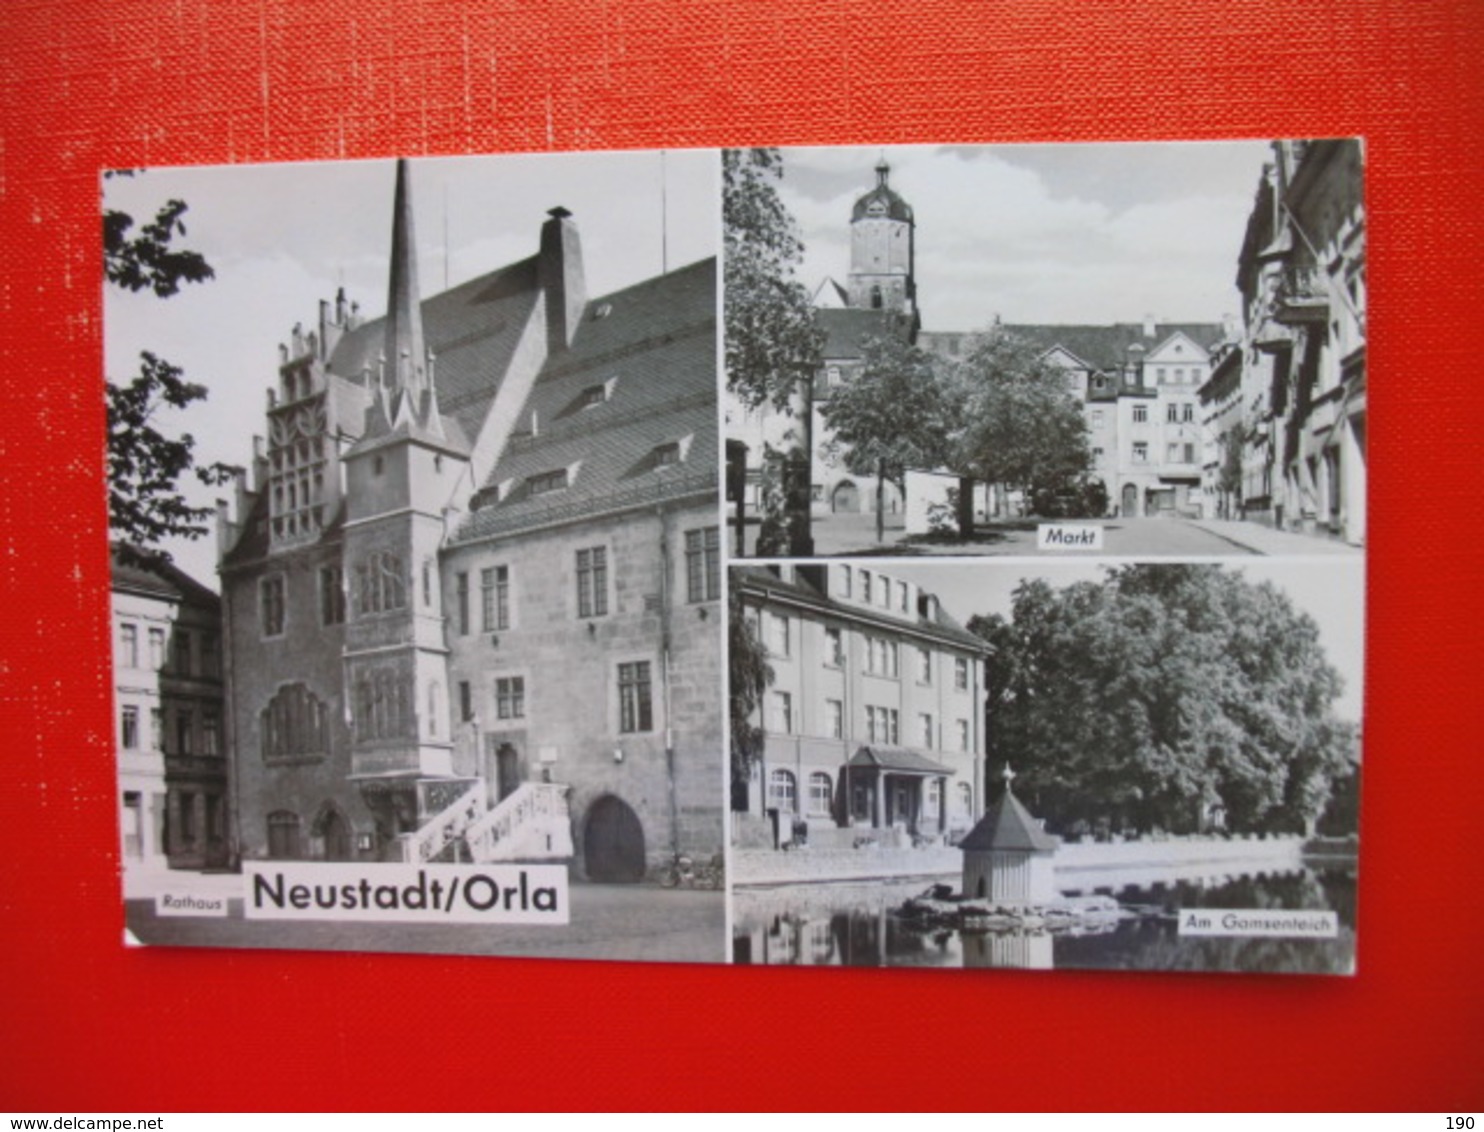 Neustadt/Orla - Neustadt / Orla